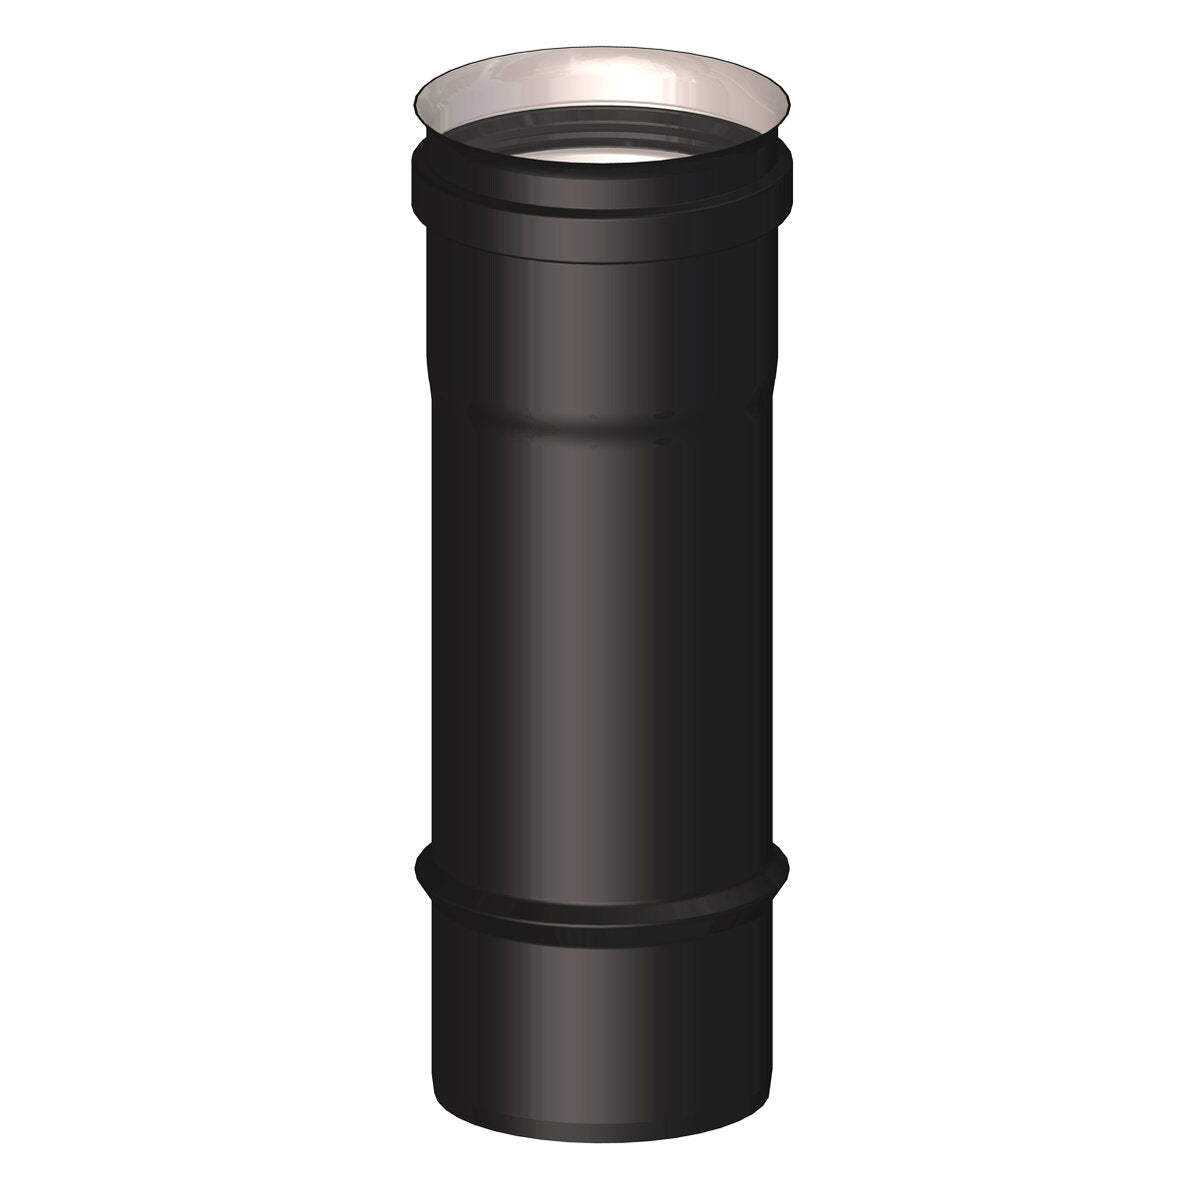 Straight element M/F diam. 100 mm length 250 mm flue exhaust pellet stove and pellet boiler